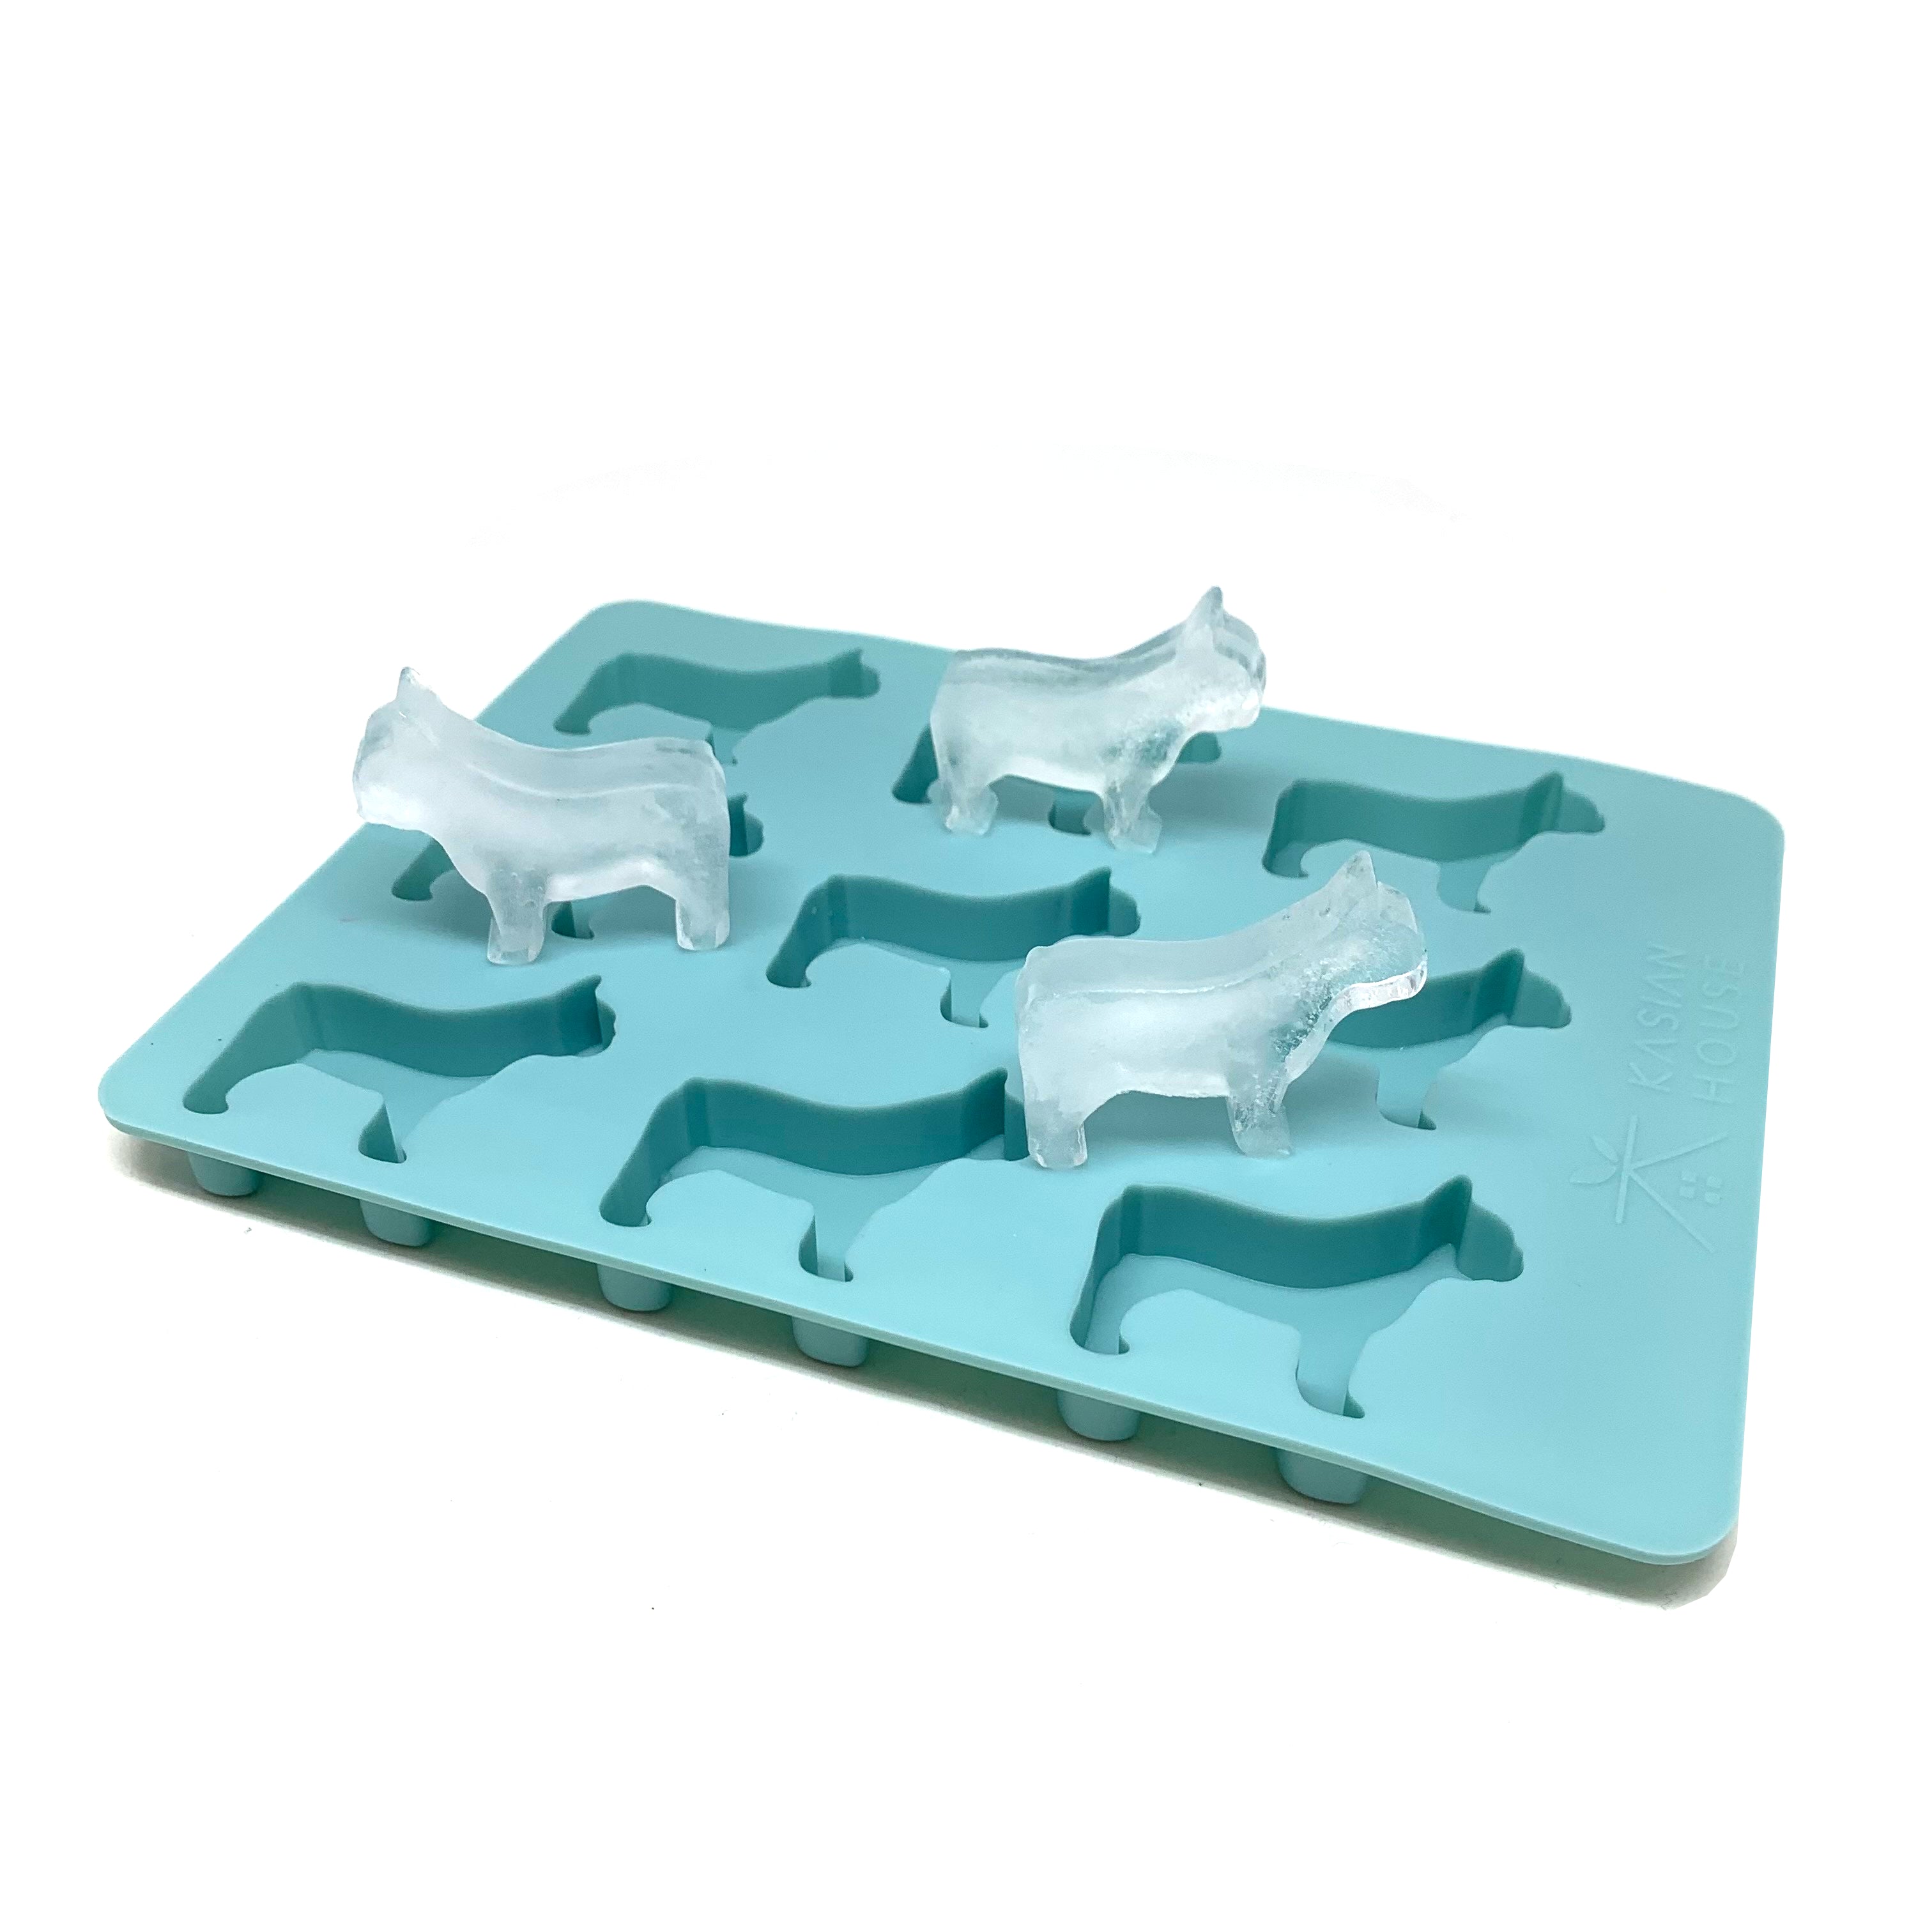 Kasian House Corgi Silicone Ice Cube Tray and Treat Mold, 9 Welsh Corgi Shaped Molds, BPA Free and Heat Resistant